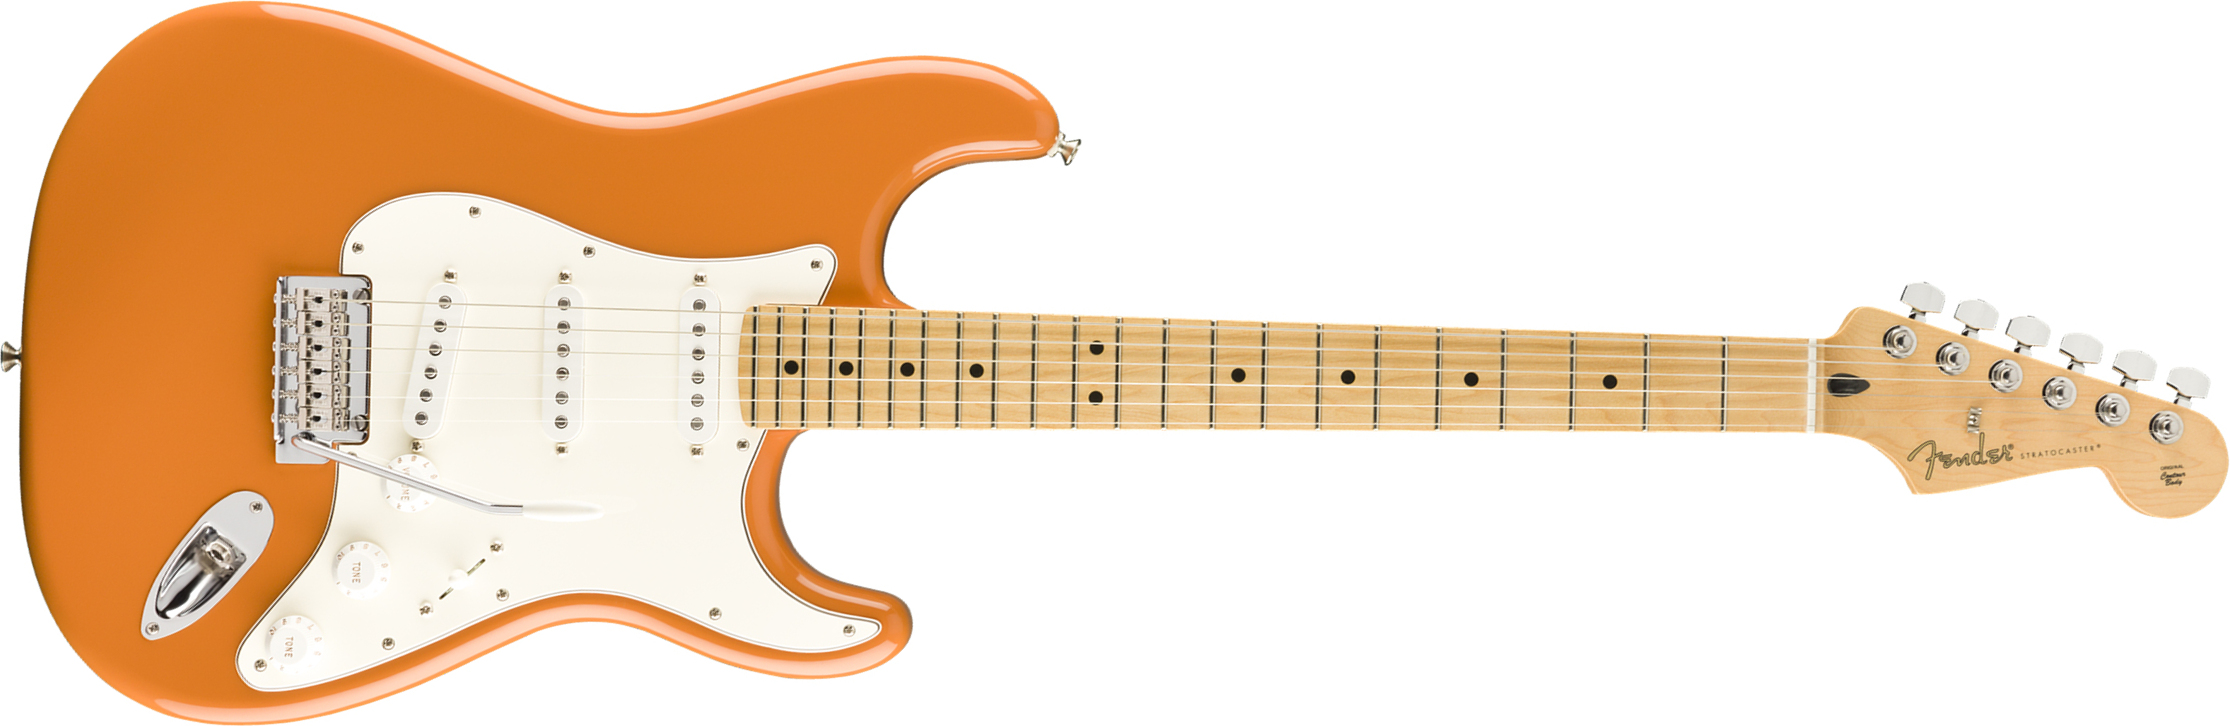 Fender Strat Player Mex Sss Mn - Capri Orange - Str shape electric guitar - Main picture